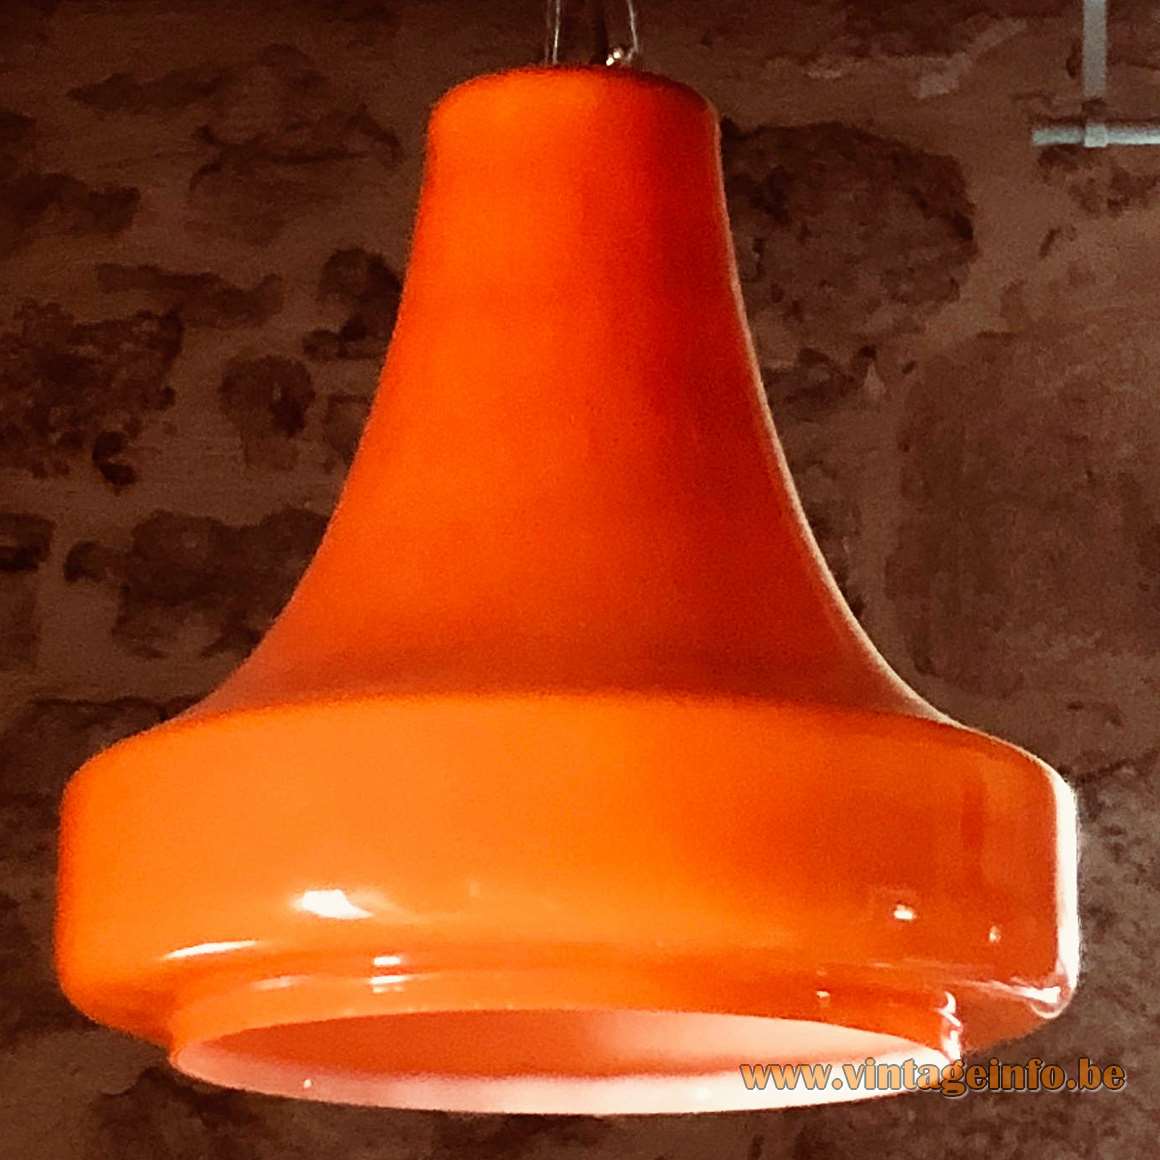 Herwig & Frank Sterckx pendant lamp designed for De Rupel Glass, Boom in 1968 – 1969